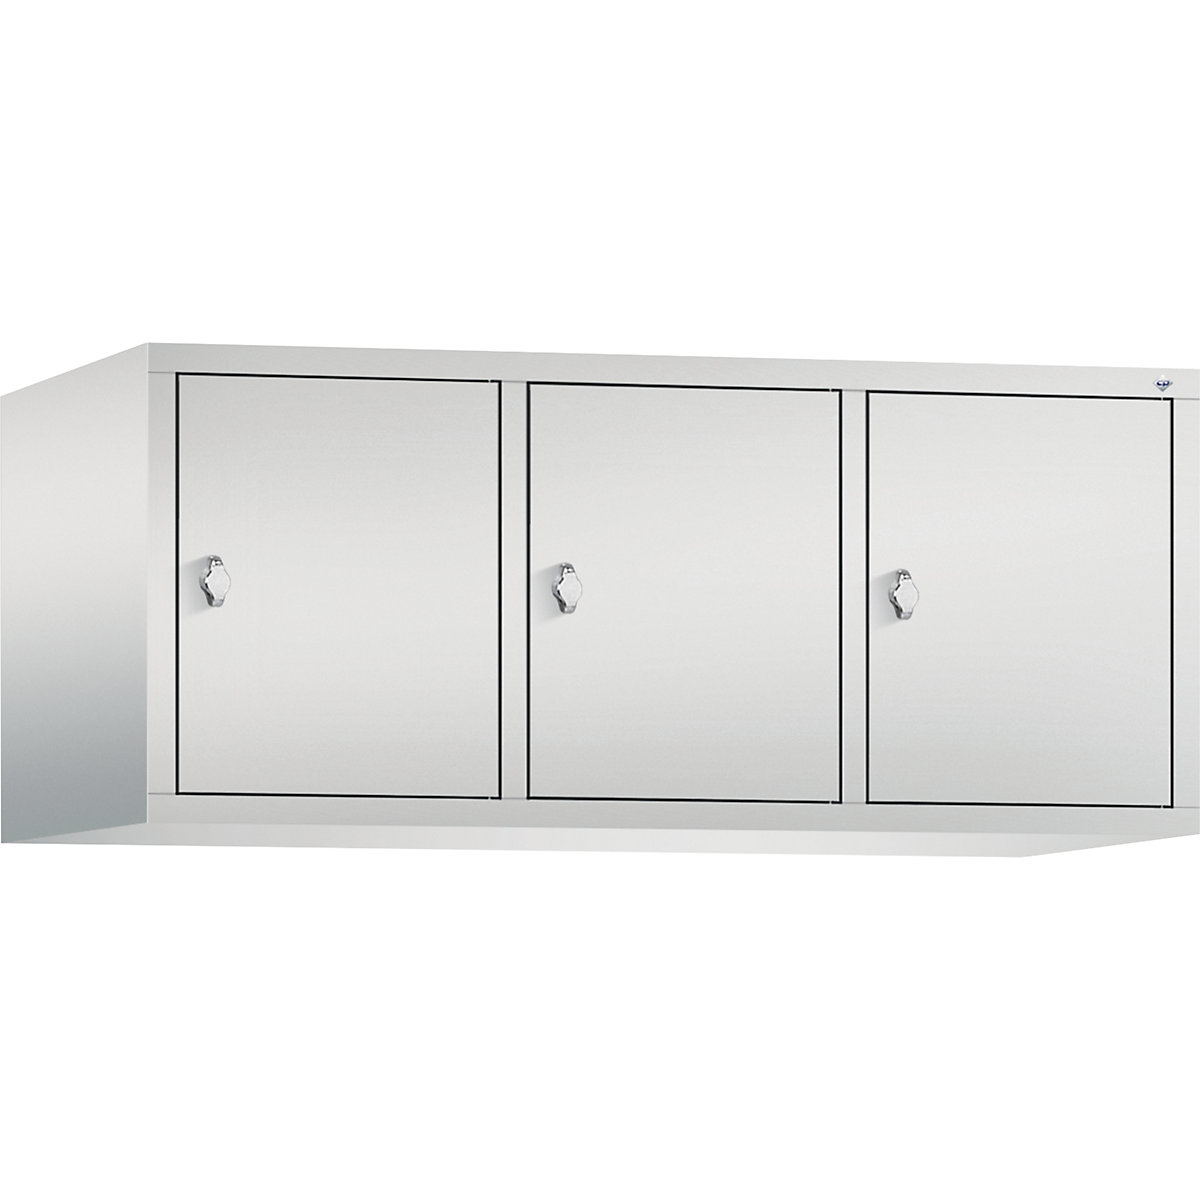 C+P – Altillo CLASSIC, 3 compartimentos, anchura de compartimento 400 mm, gris luminoso